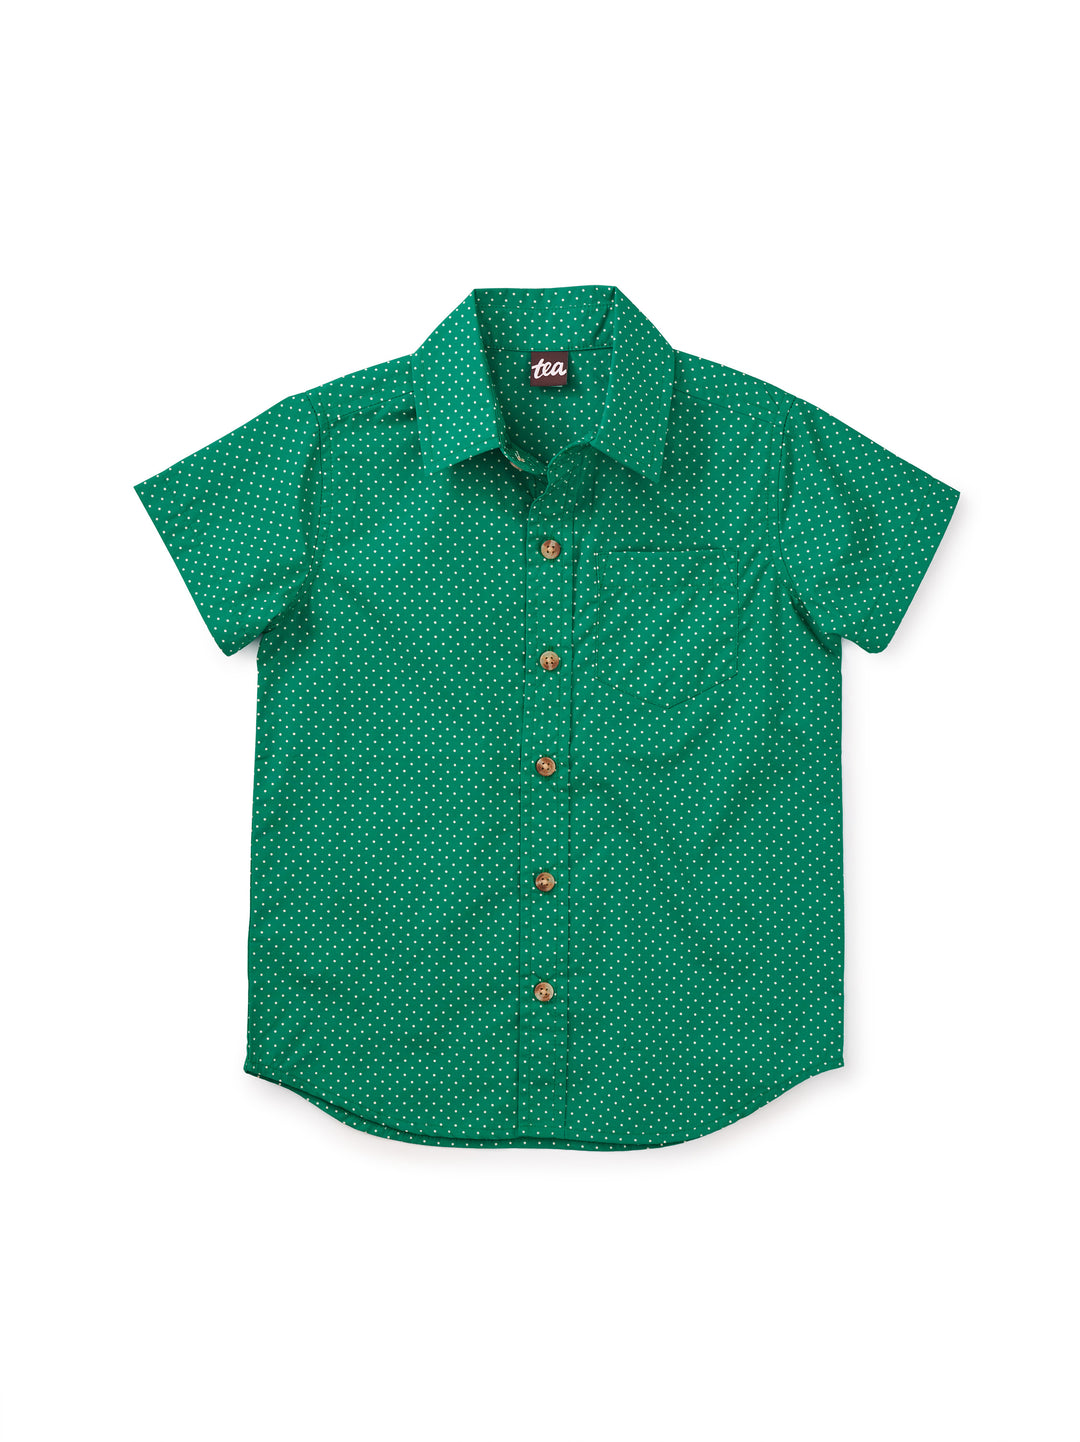 Tea Collection Button Up Woven Shirt, Polka Dots in Green |Mockingbird Baby & Kids